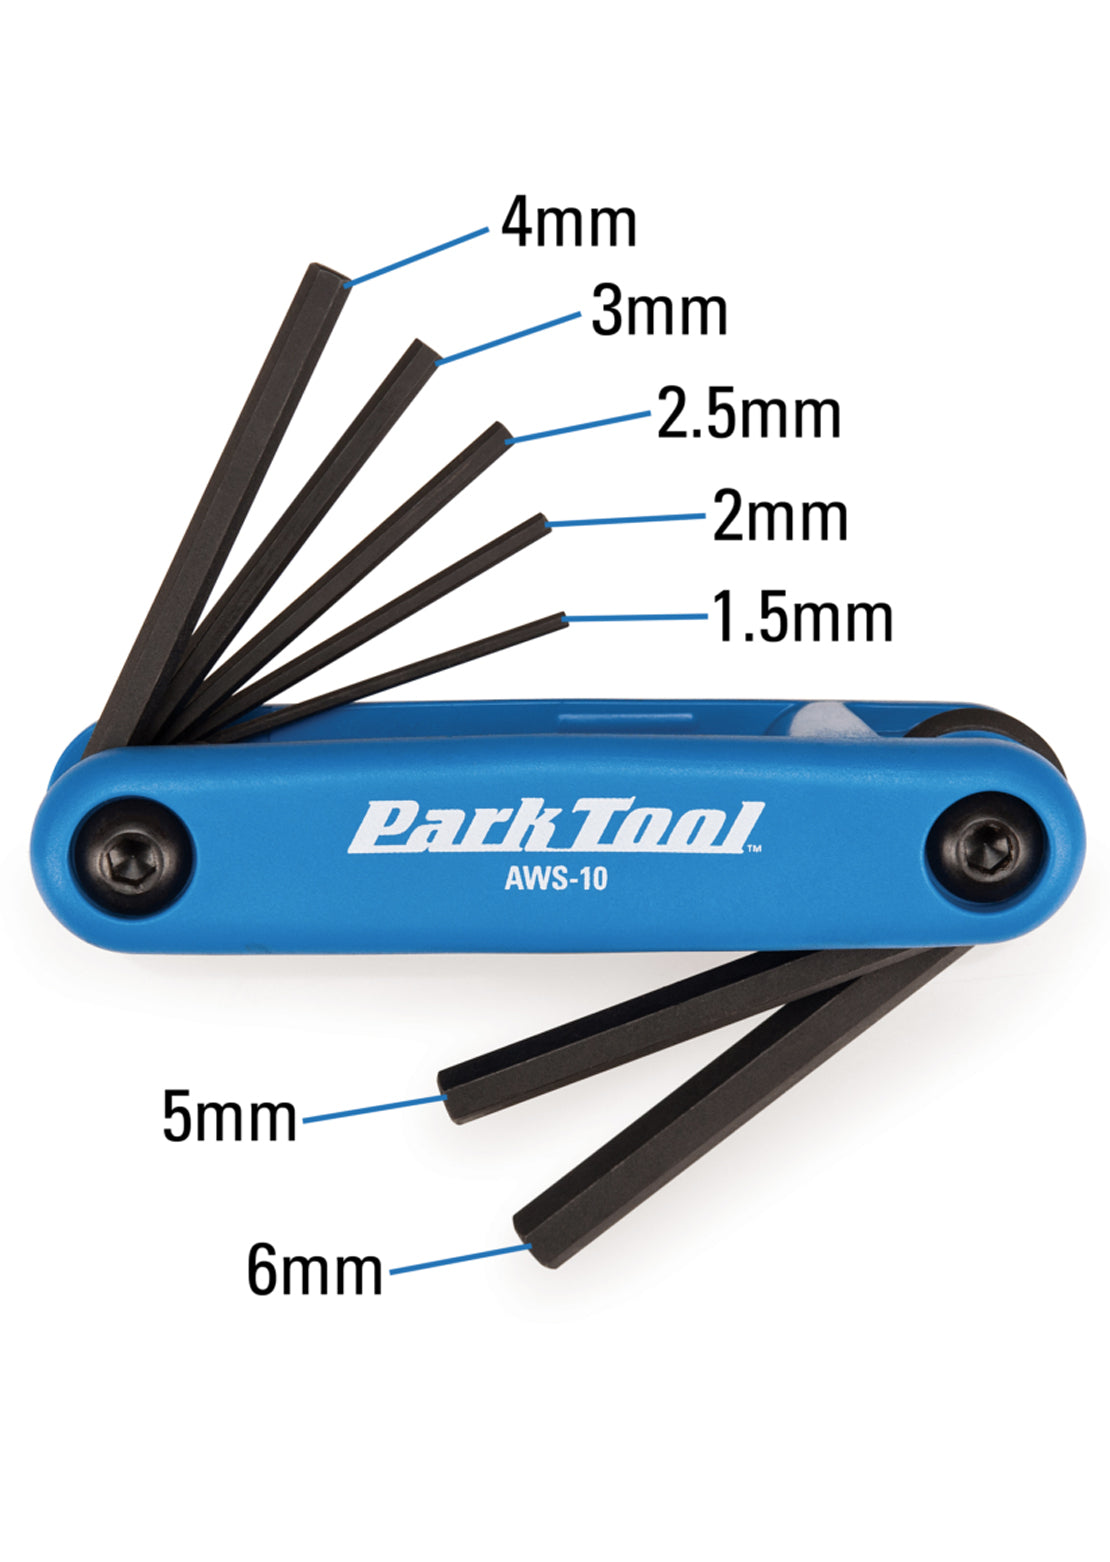 Park Tool AWS-10 Folding Hex Wrench Bike Tool Blue